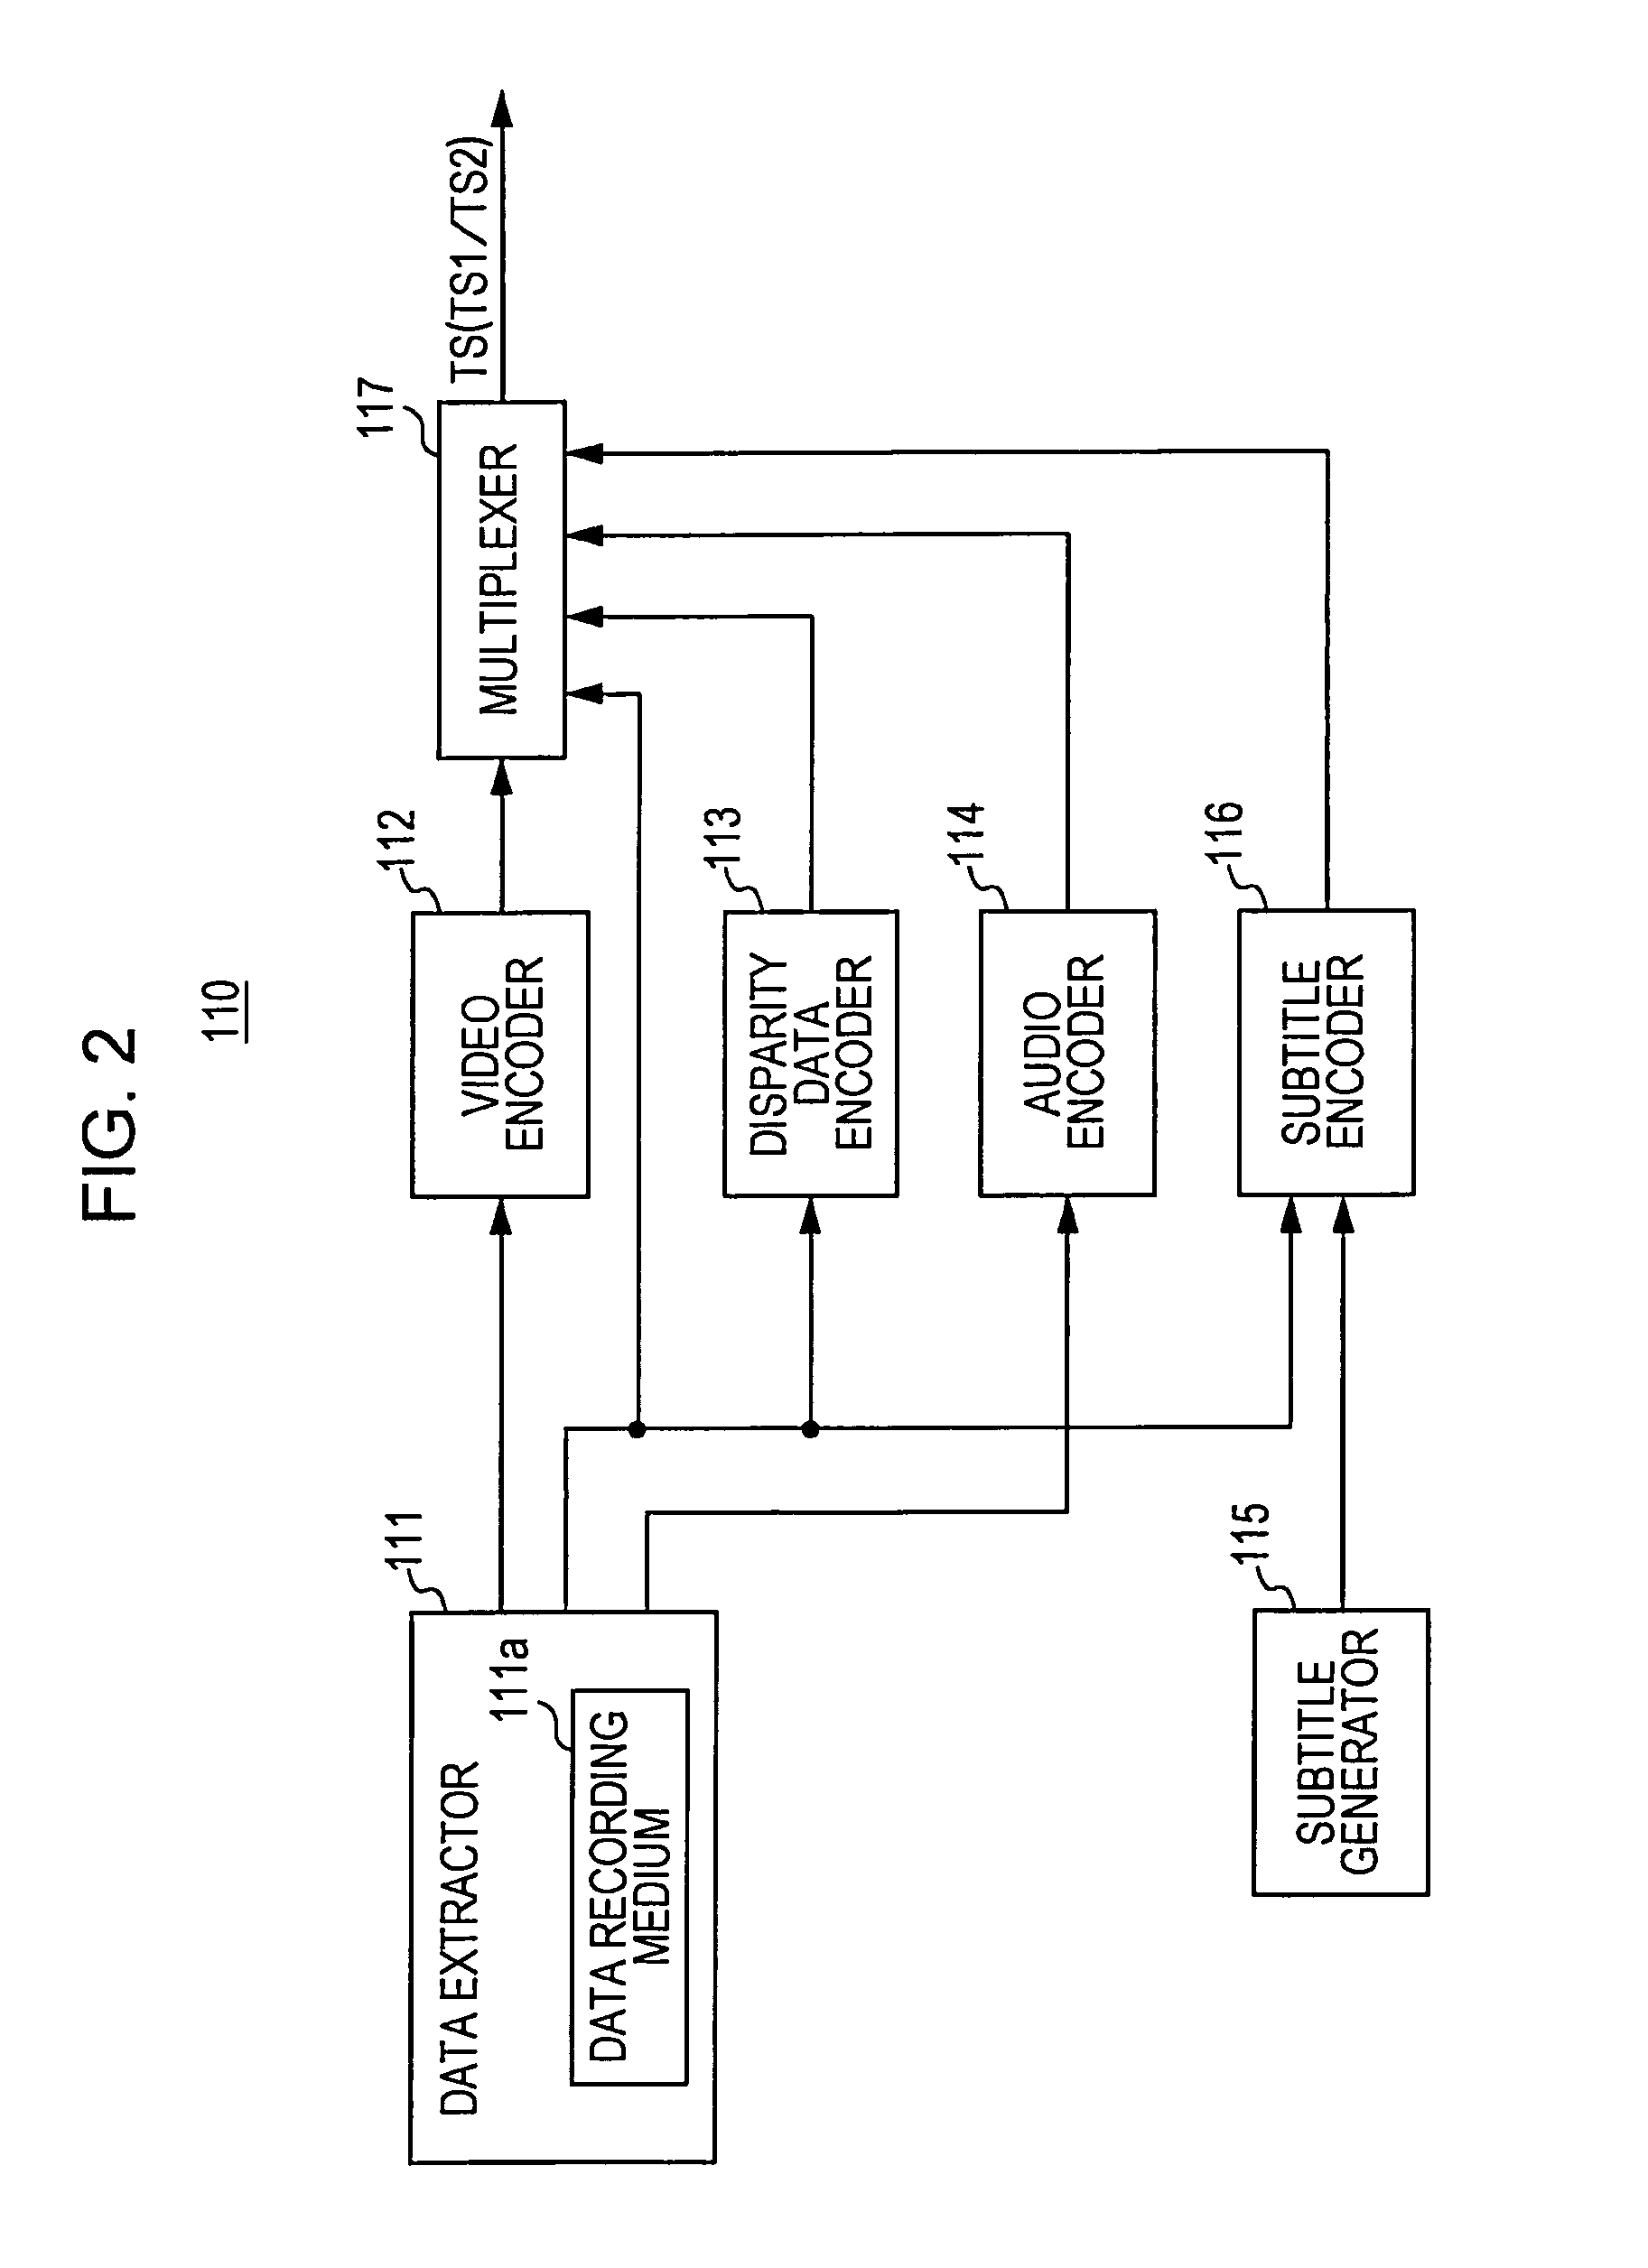 Apparatus and method of transmitting stereoscopic image data and apparatus and method of receiving stereoscopic image data